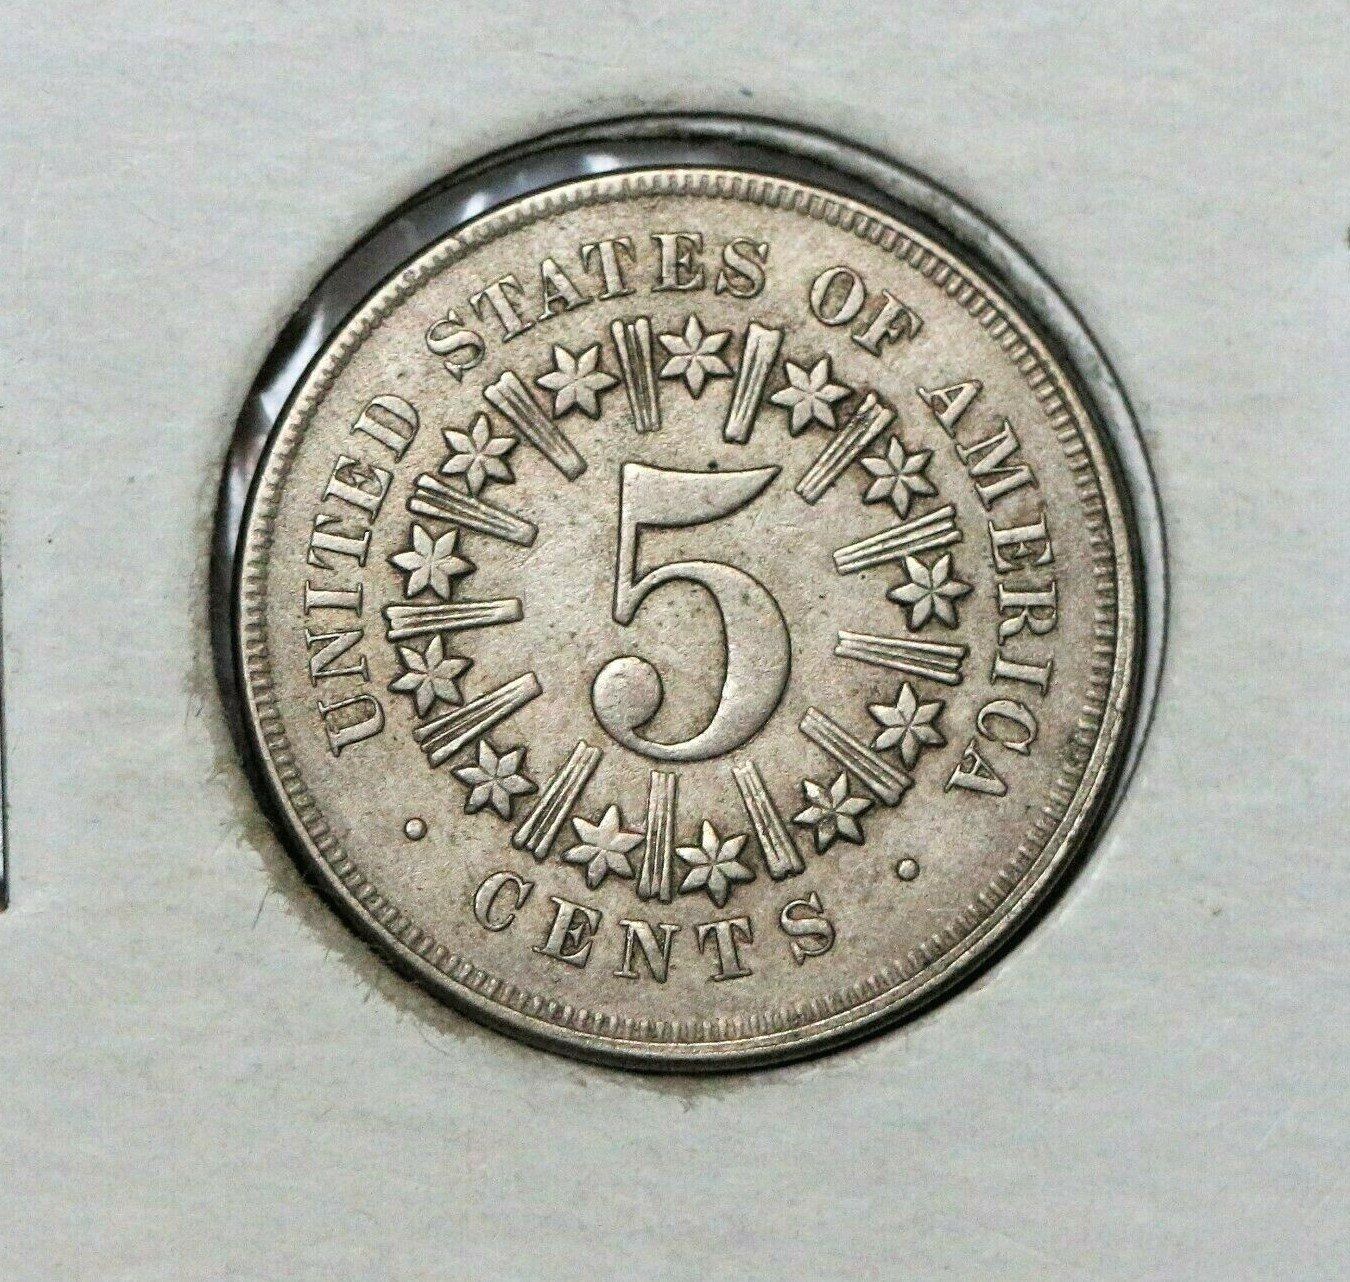 1867 Shield Nickel XF-45 | Of Coins & Crystals